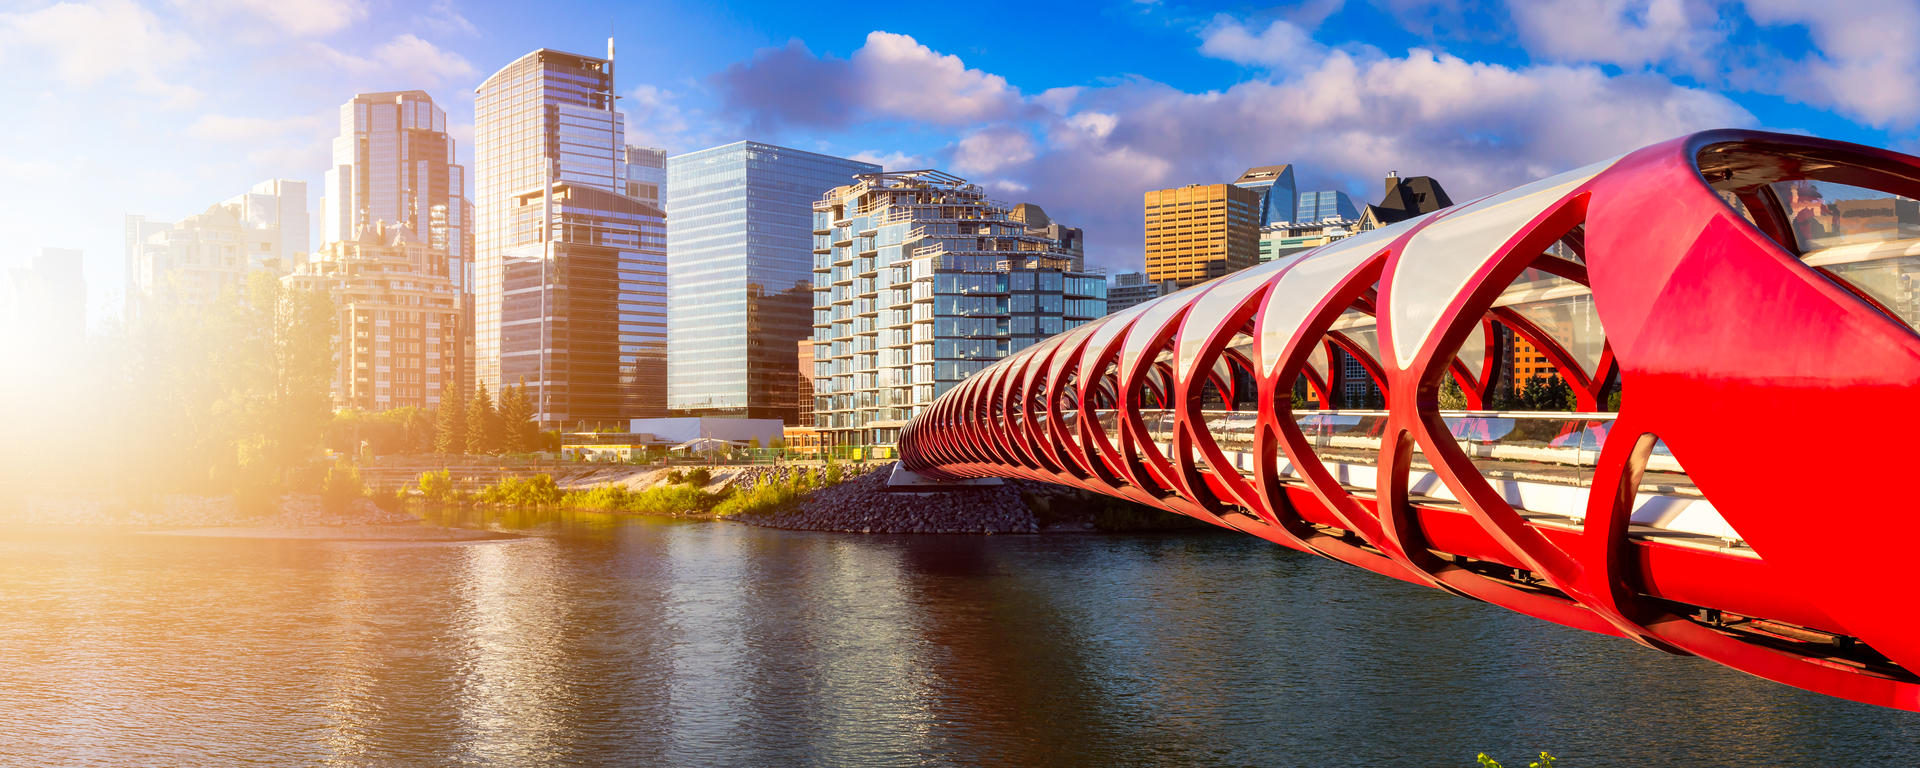 Downtown Calgary with Peace Bridge